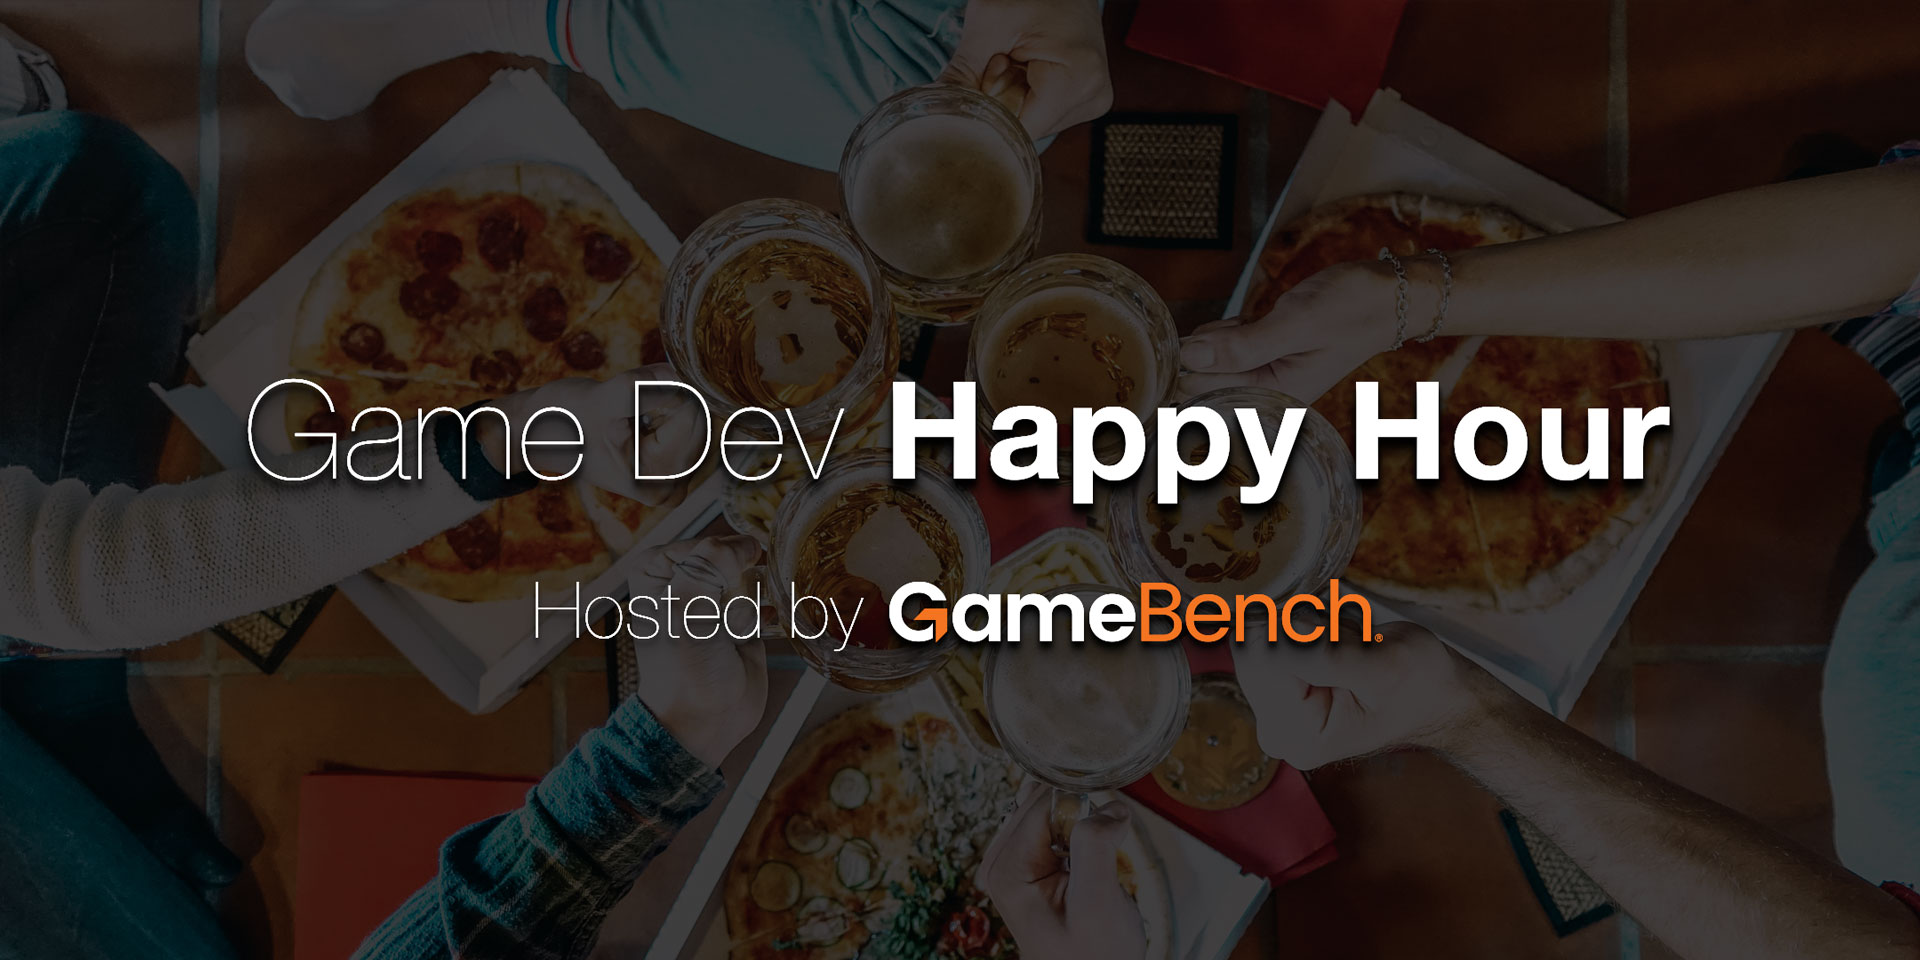 GameBench | Mobile performance testing